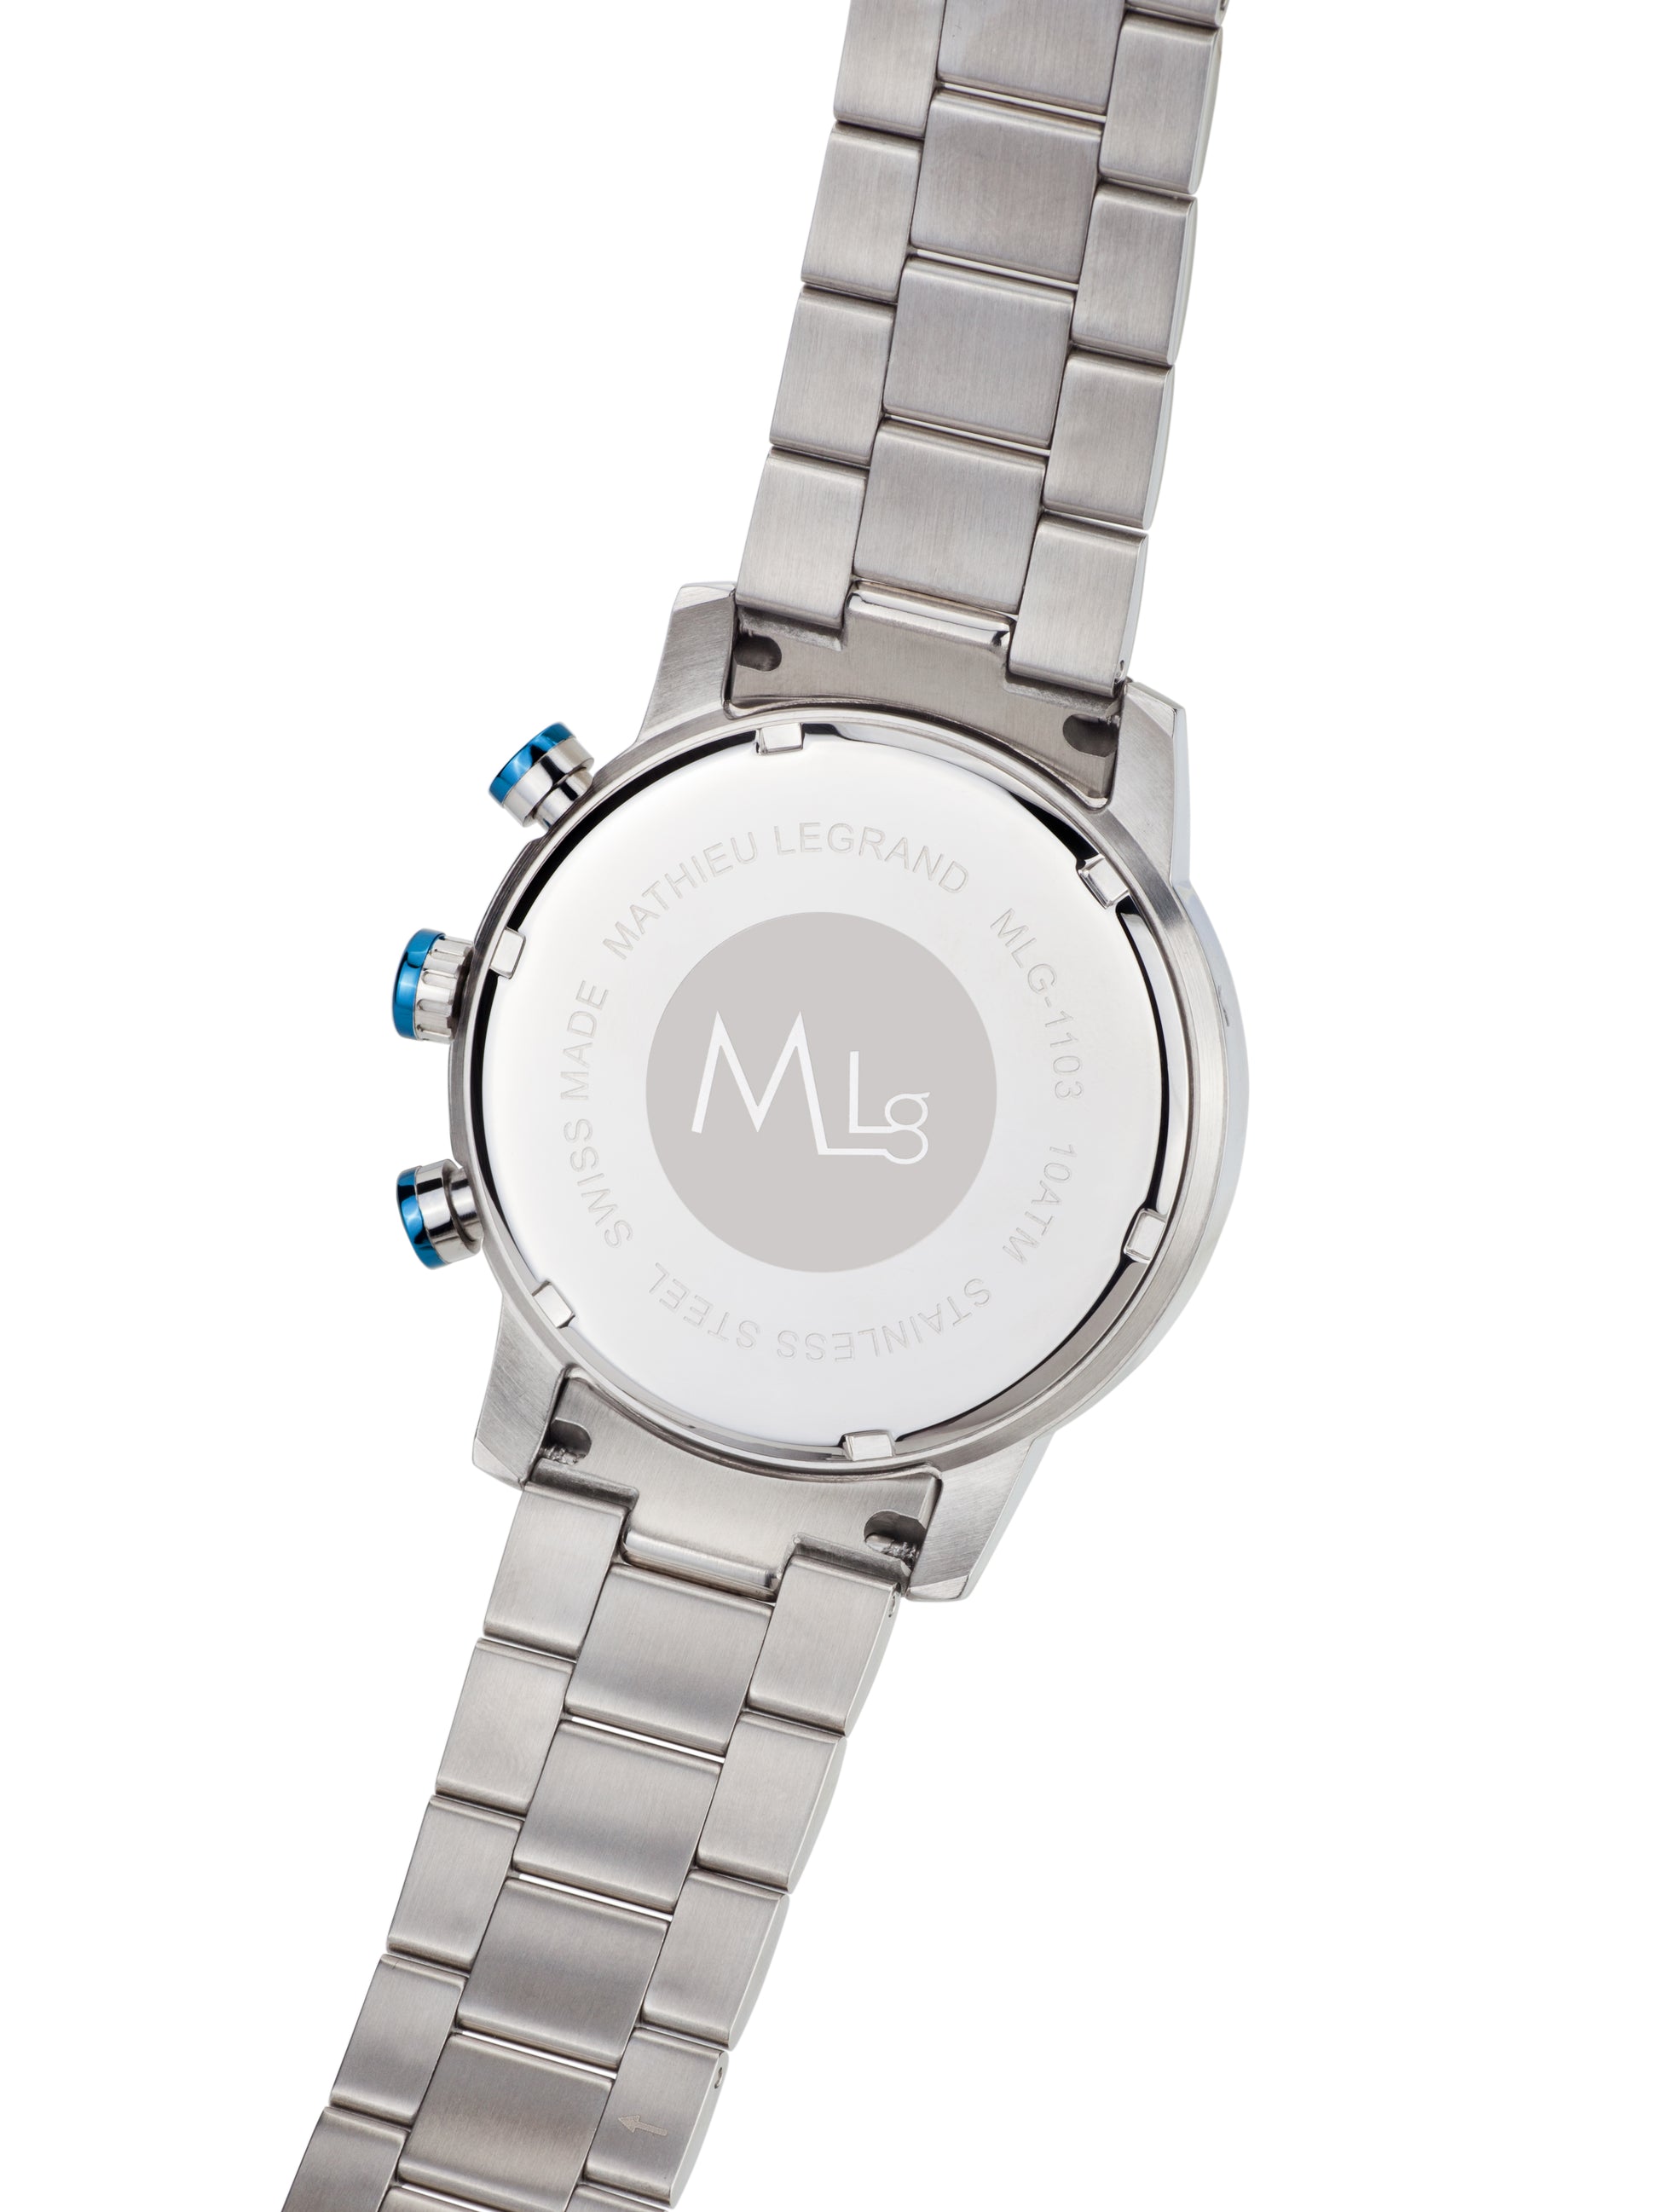 Automatic watches — Tableau du Bord — Mathieu Legrand — steel blue steel